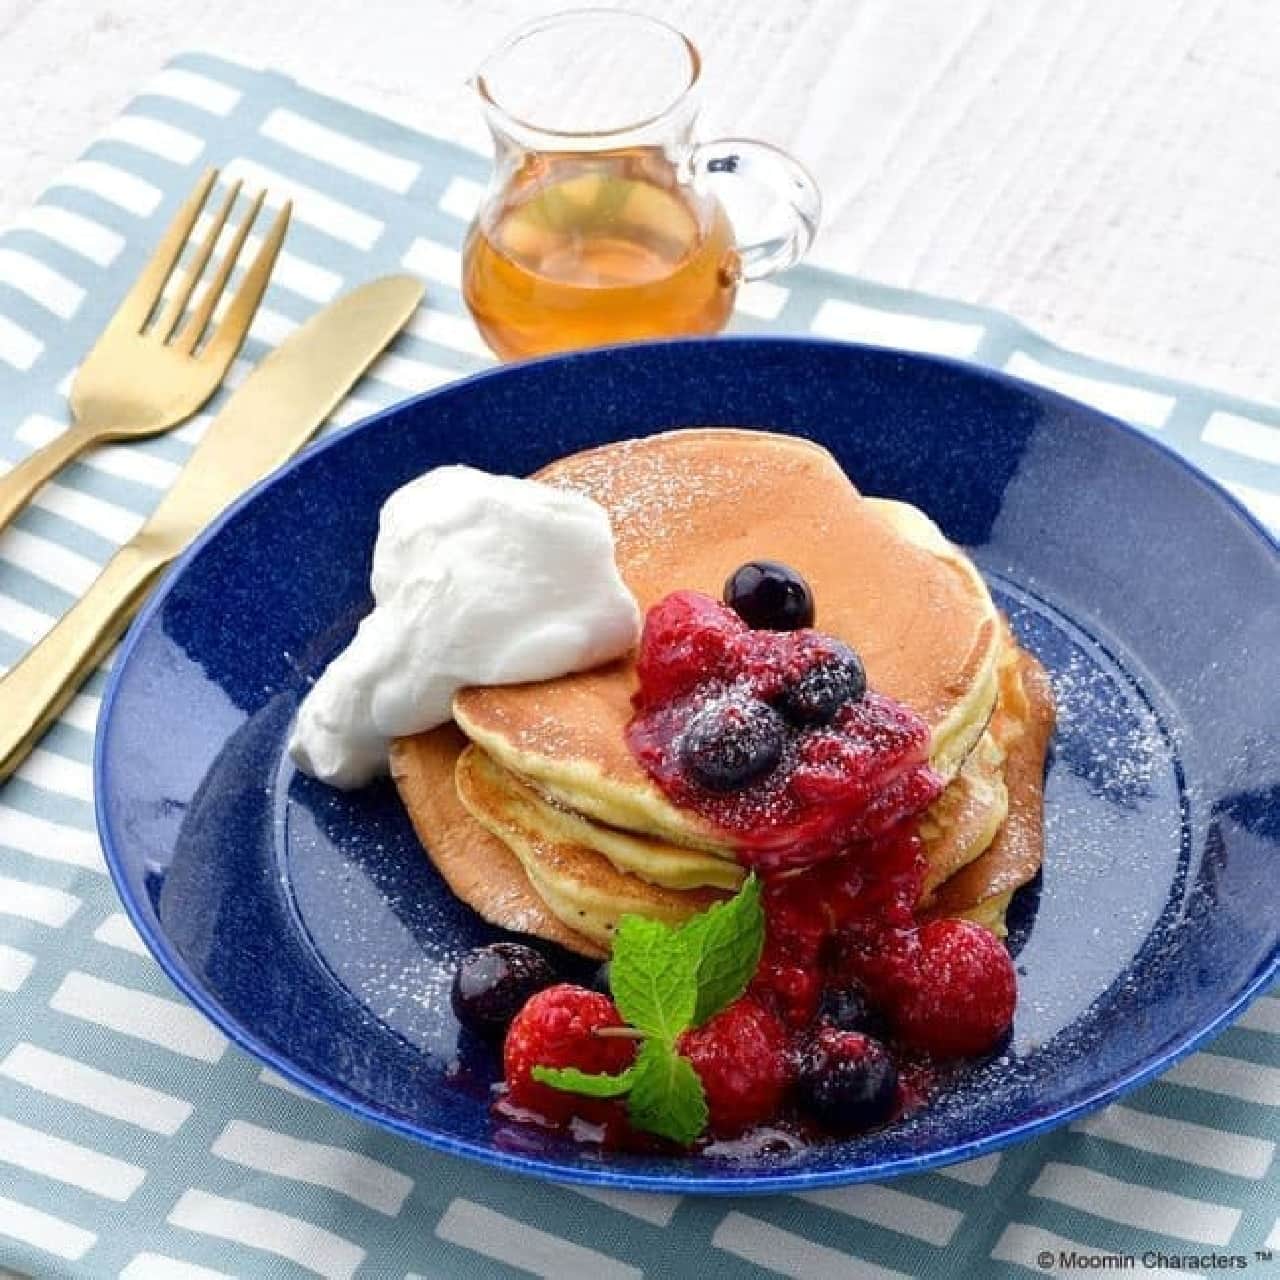 Moomin Cafe "Scandinavian style mixed berry pancake"